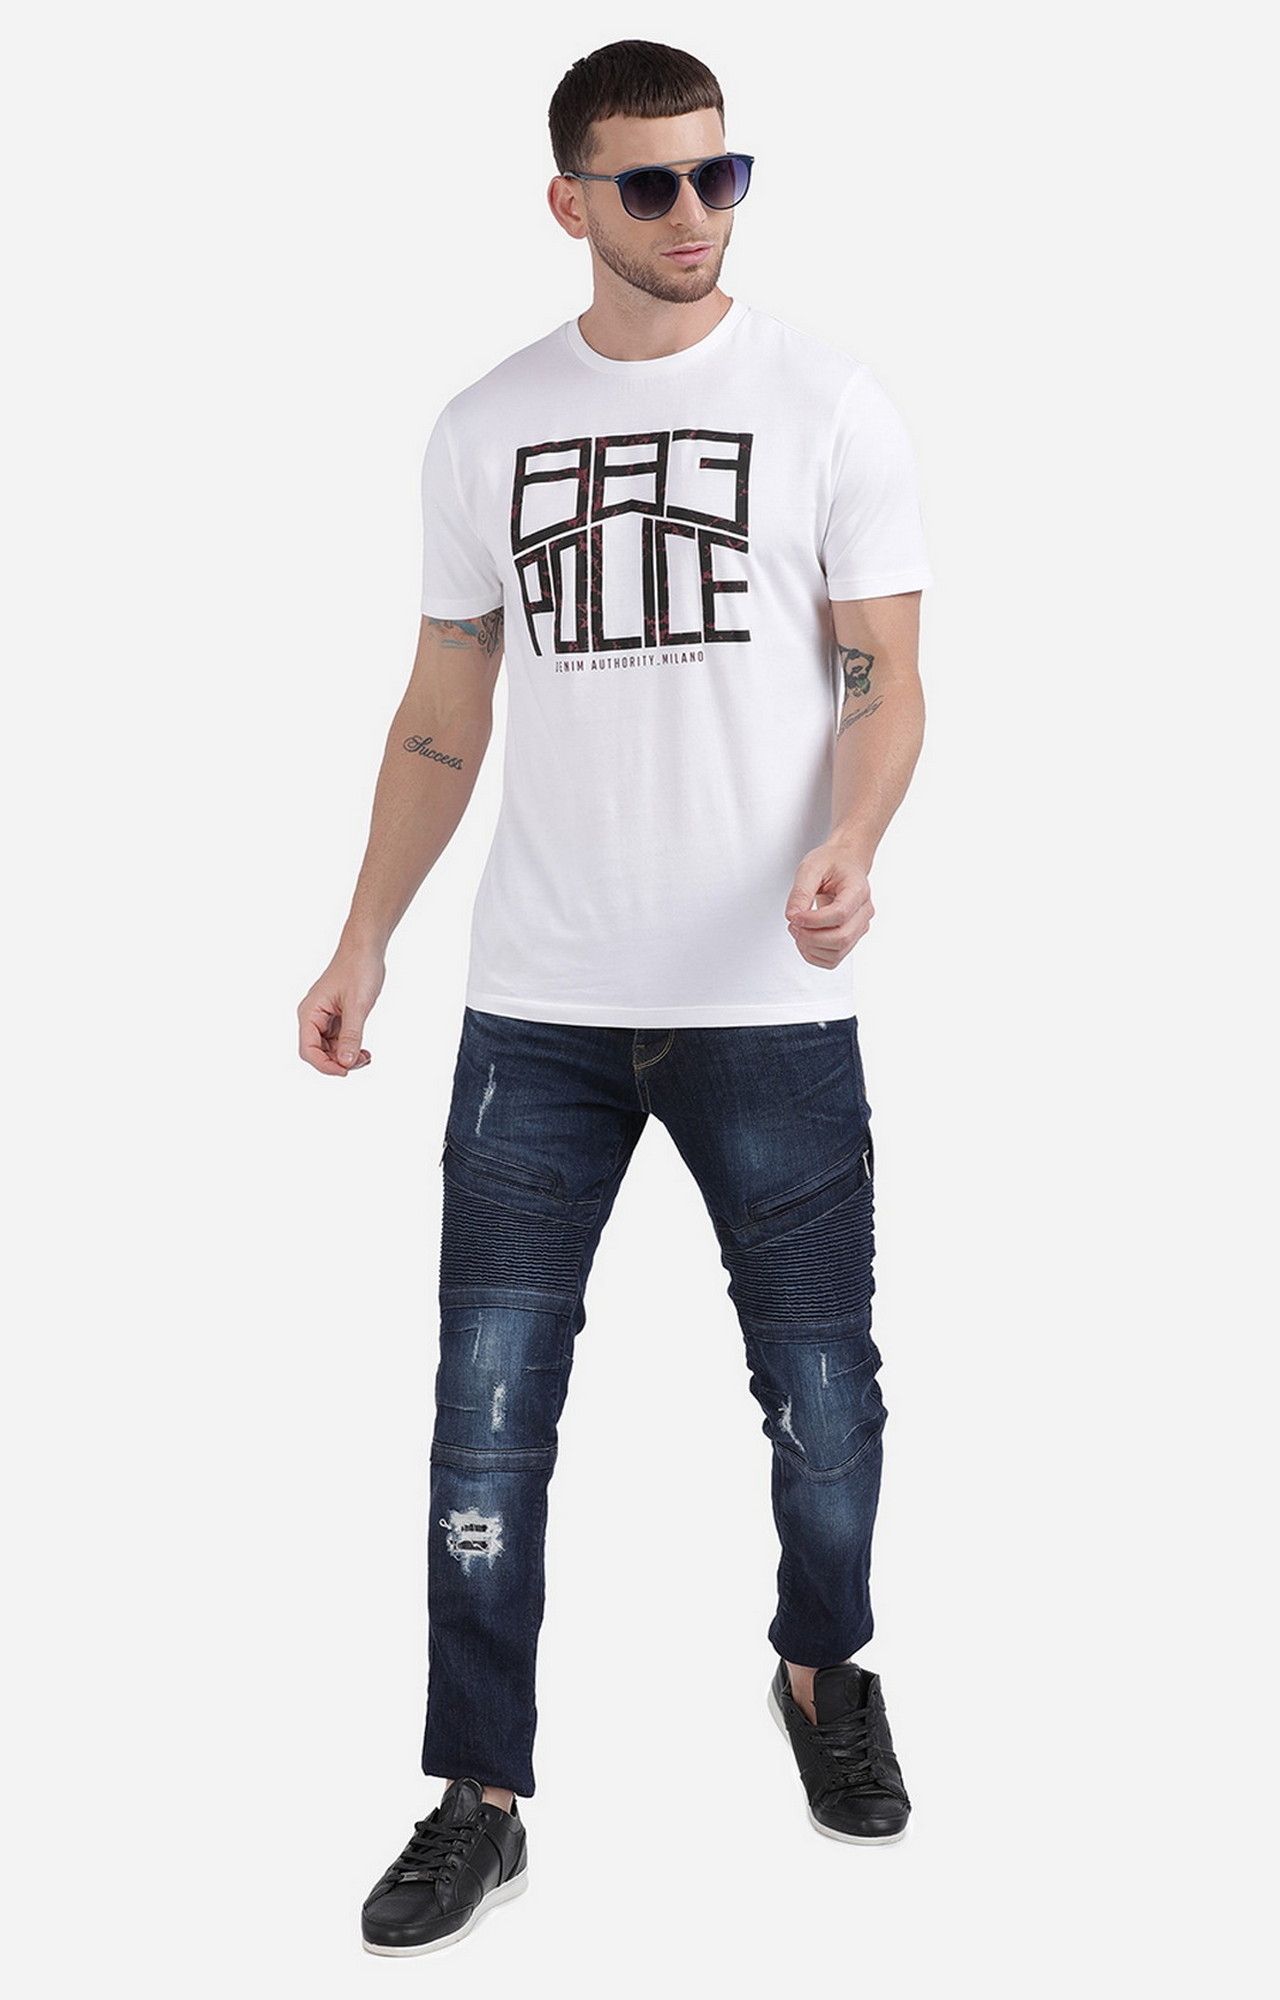 883 Police | Men's White Cotton Typographic Printed T-Shirt 6